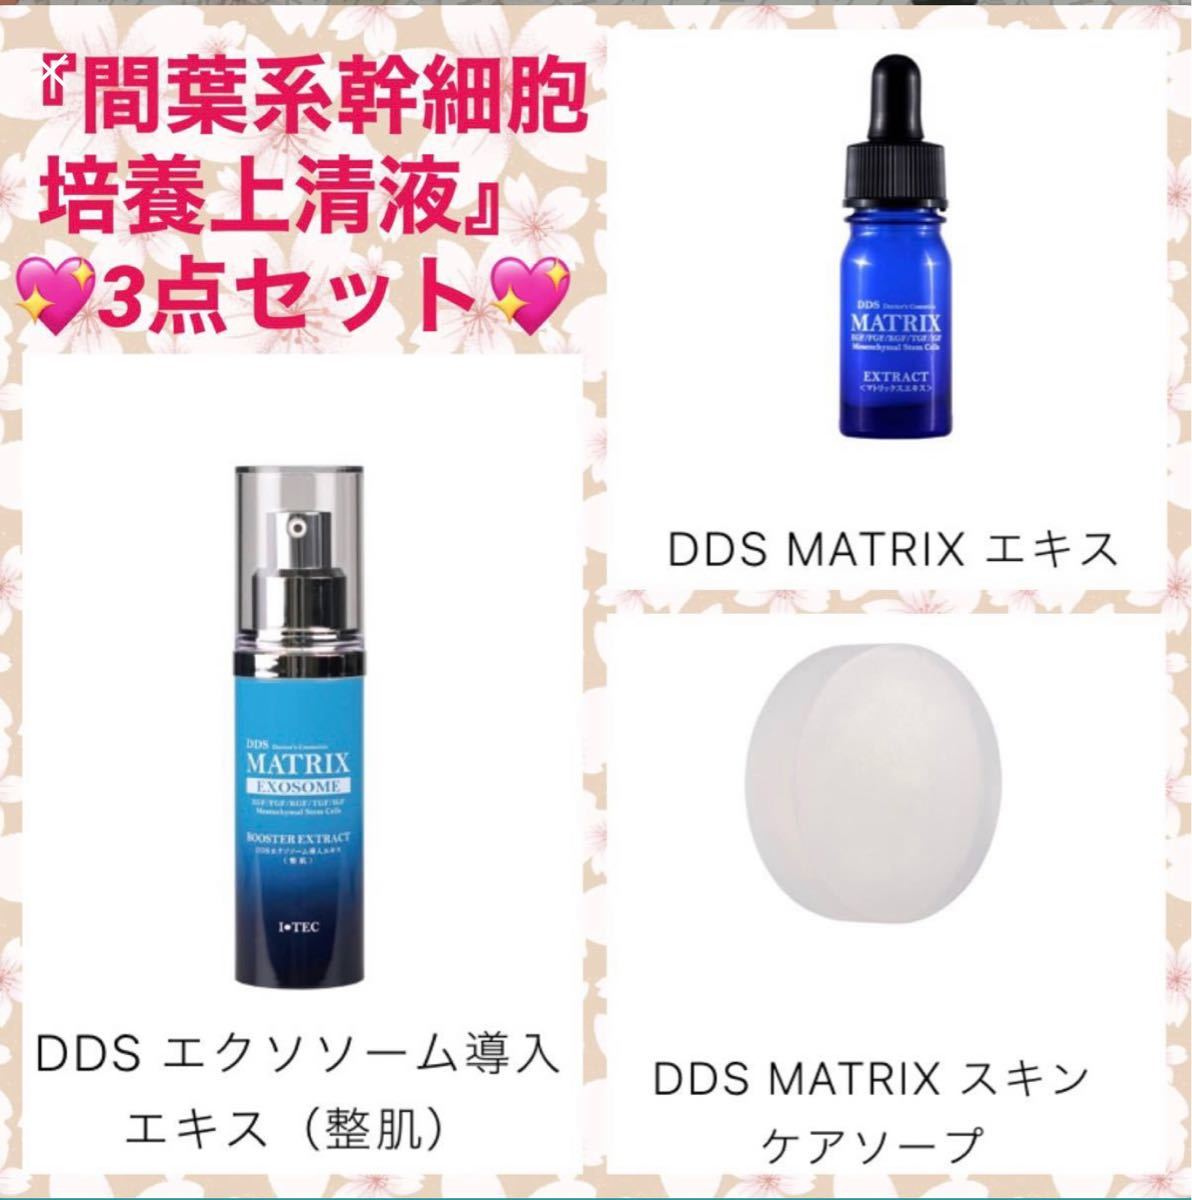 DDSエクソソーム導入エキス(整肌)30g - 基礎化粧品